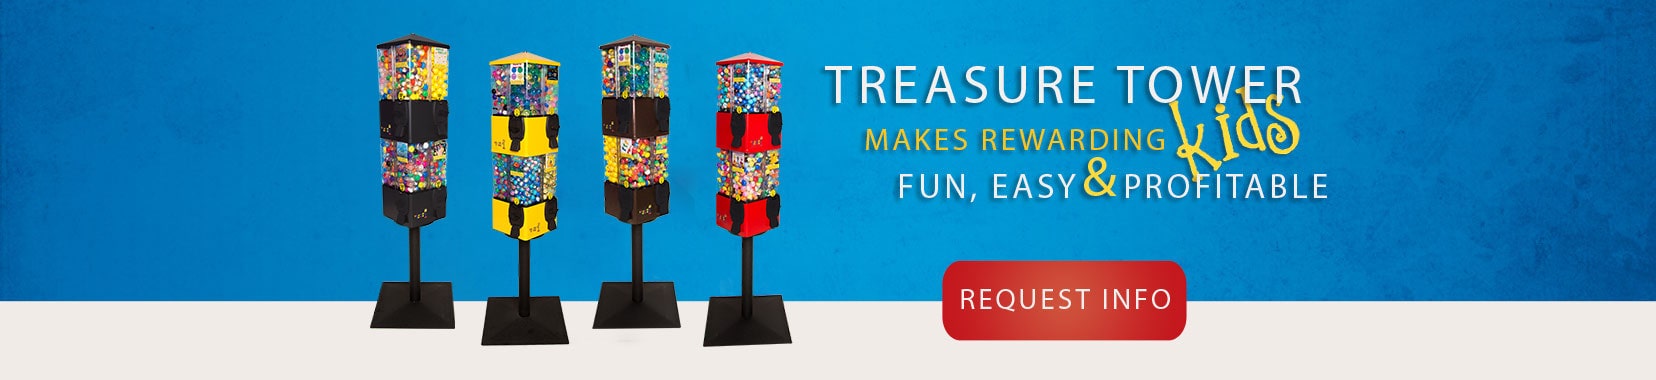 Treasure Tower makes rewarding kids, fun, easy and affordable.